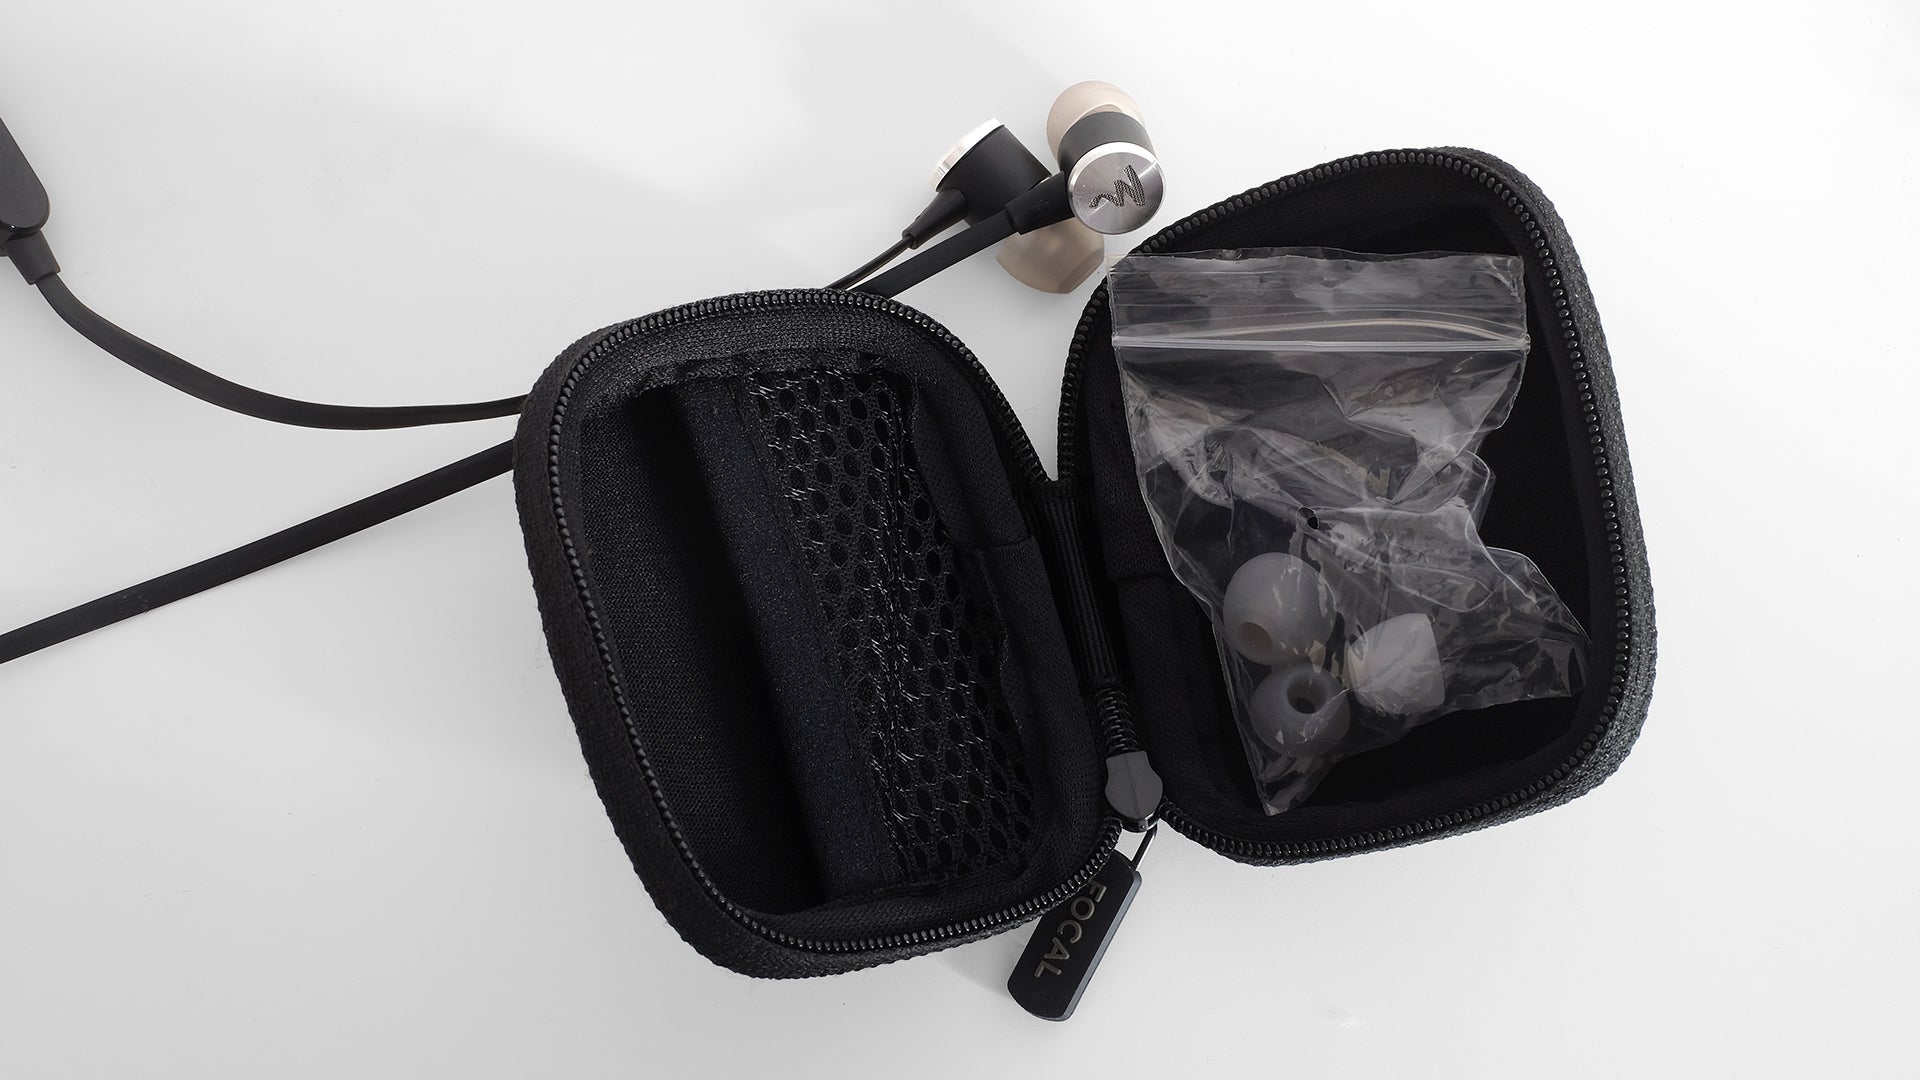 Focal Spark Wireless earphones with accessories in case.